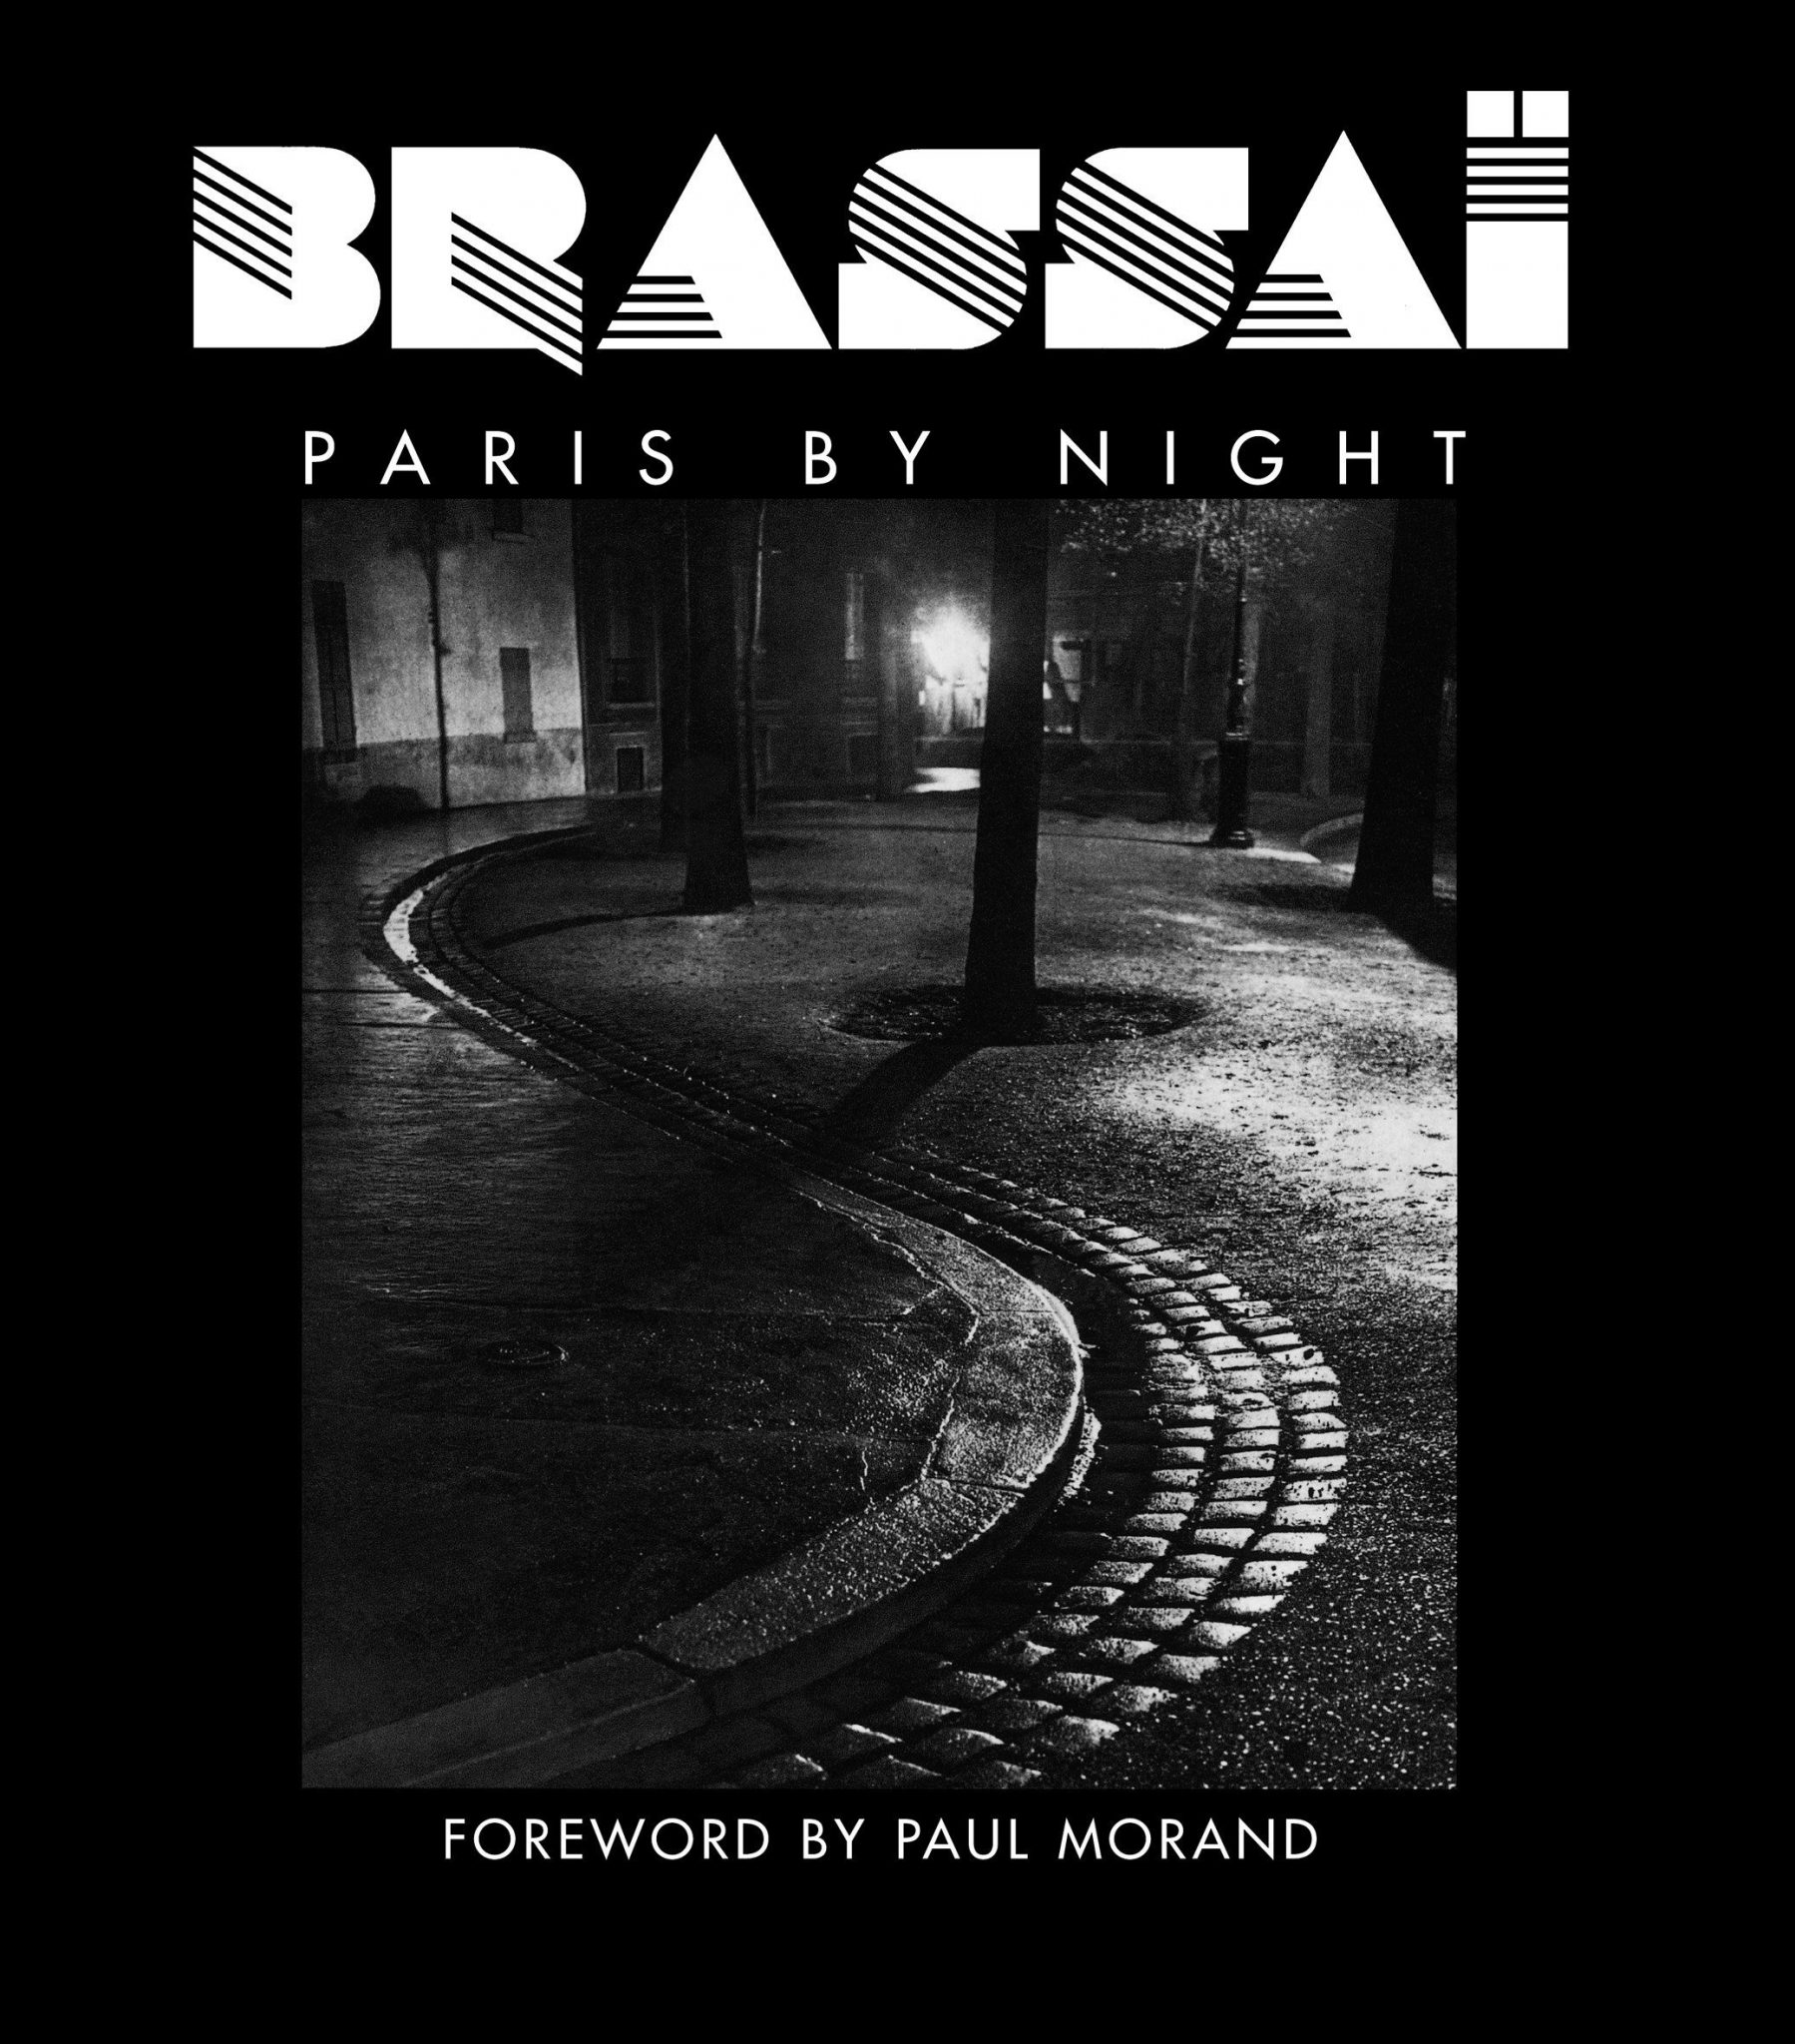 brassai paris by night